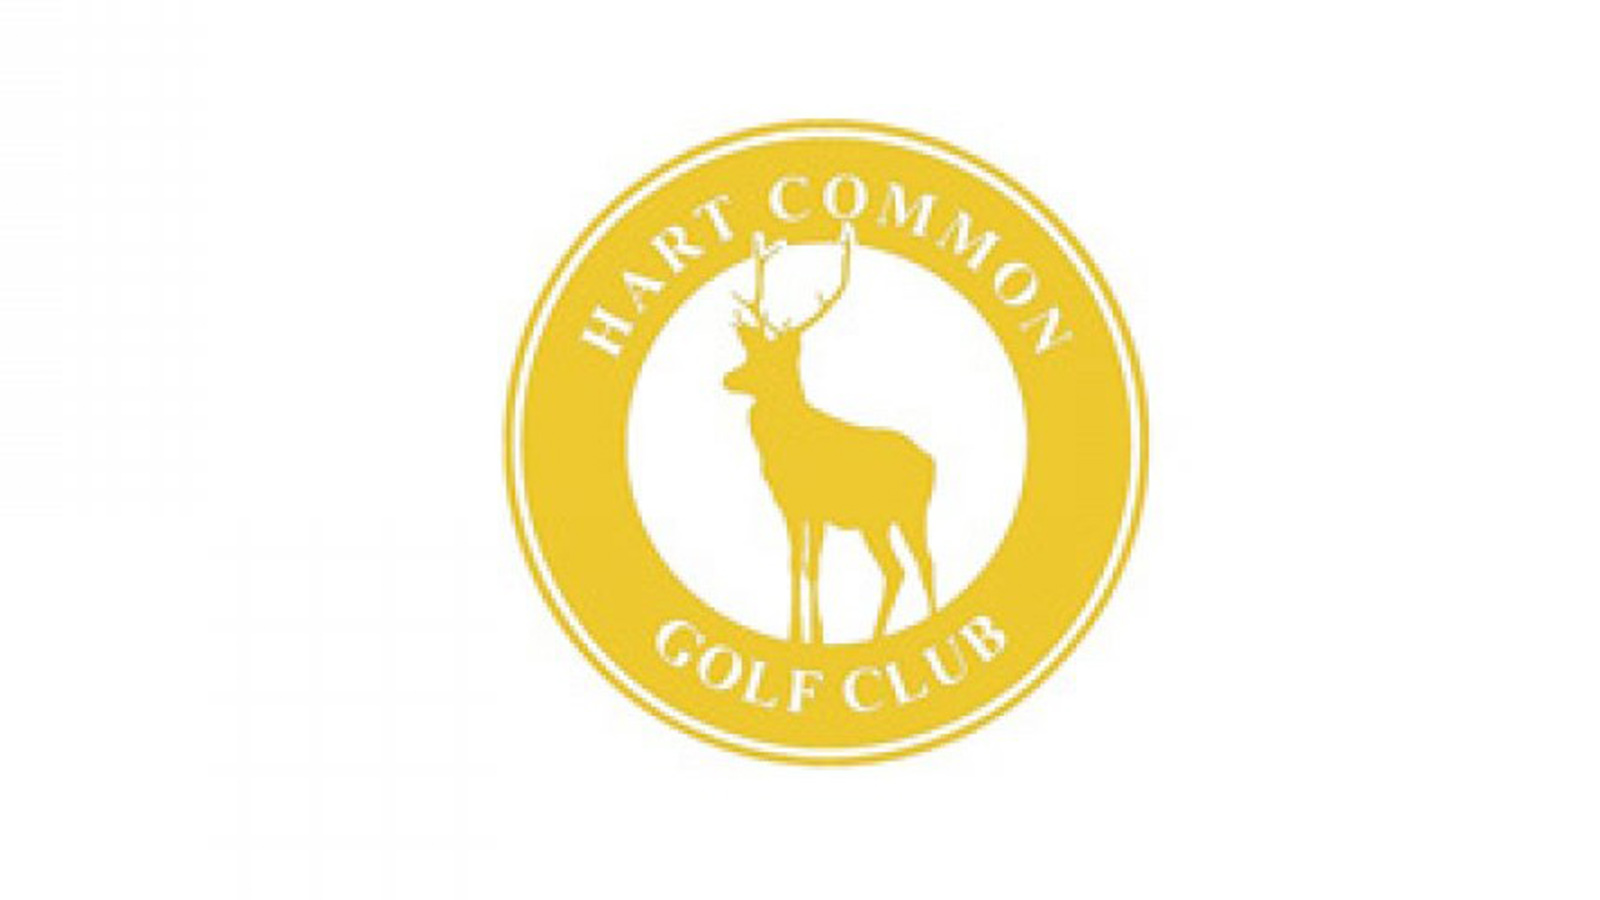 Hart Common Golf Club